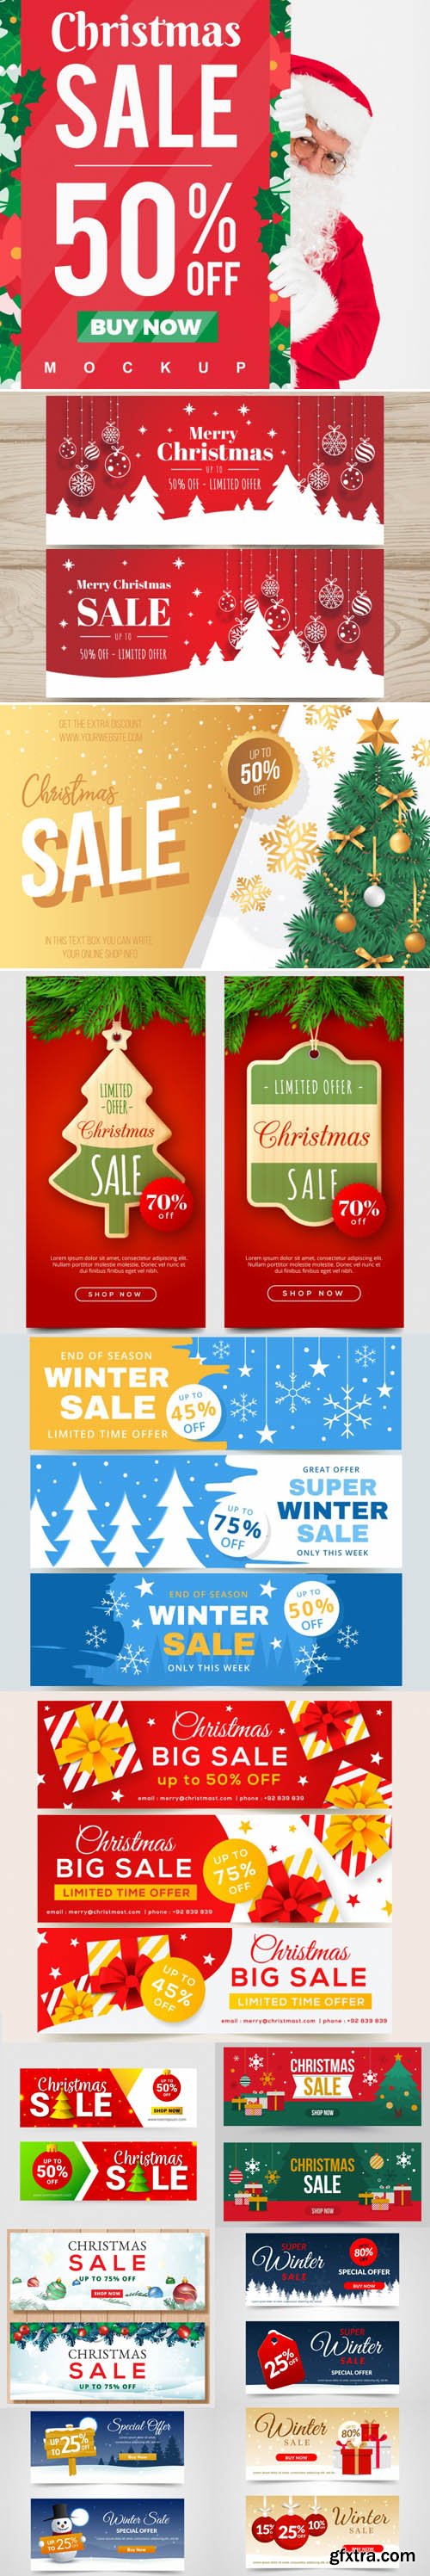 Holiday & Christmas Sales Vector Bundle 7